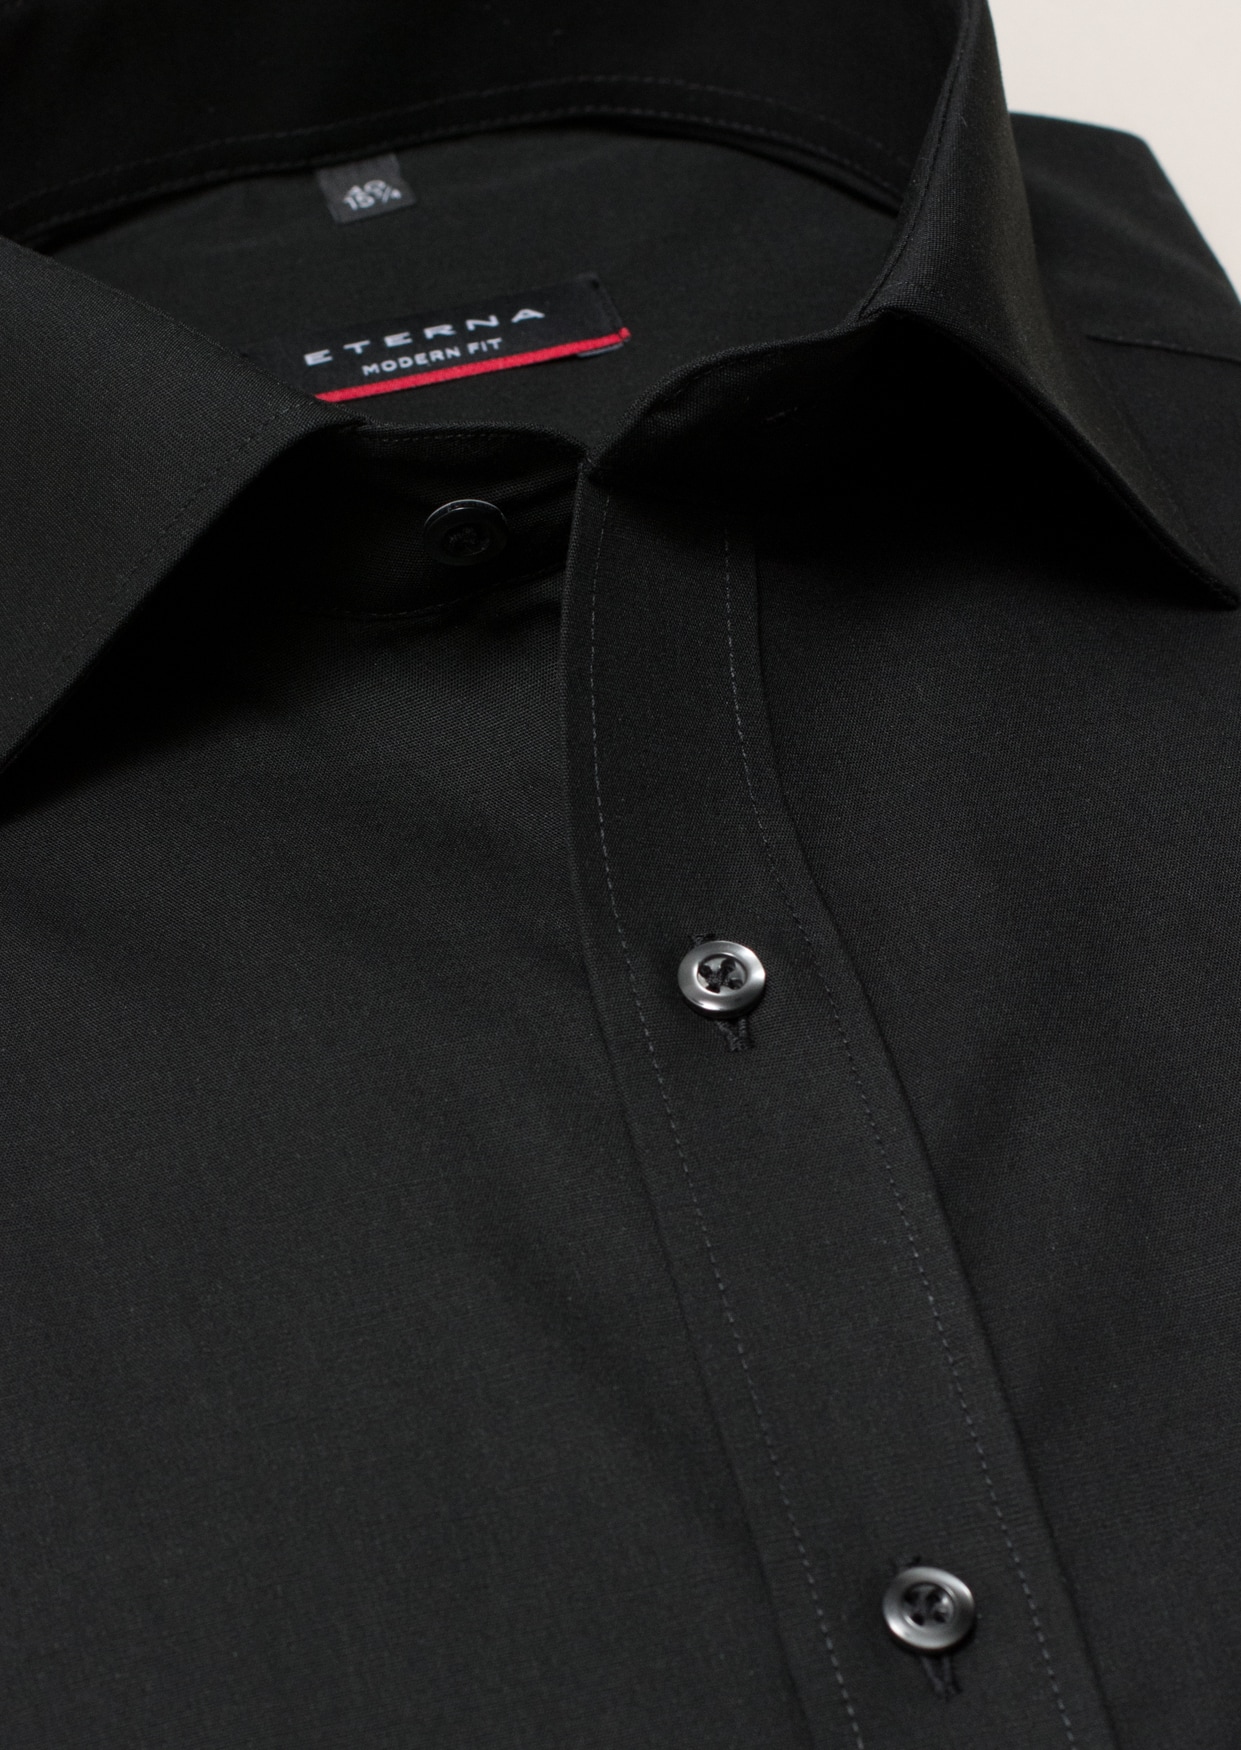 MODERN FIT Original Shirt schwarz | | 41 schwarz 1SH00113-03-91-41-1/1 unifarben Langarm in | 